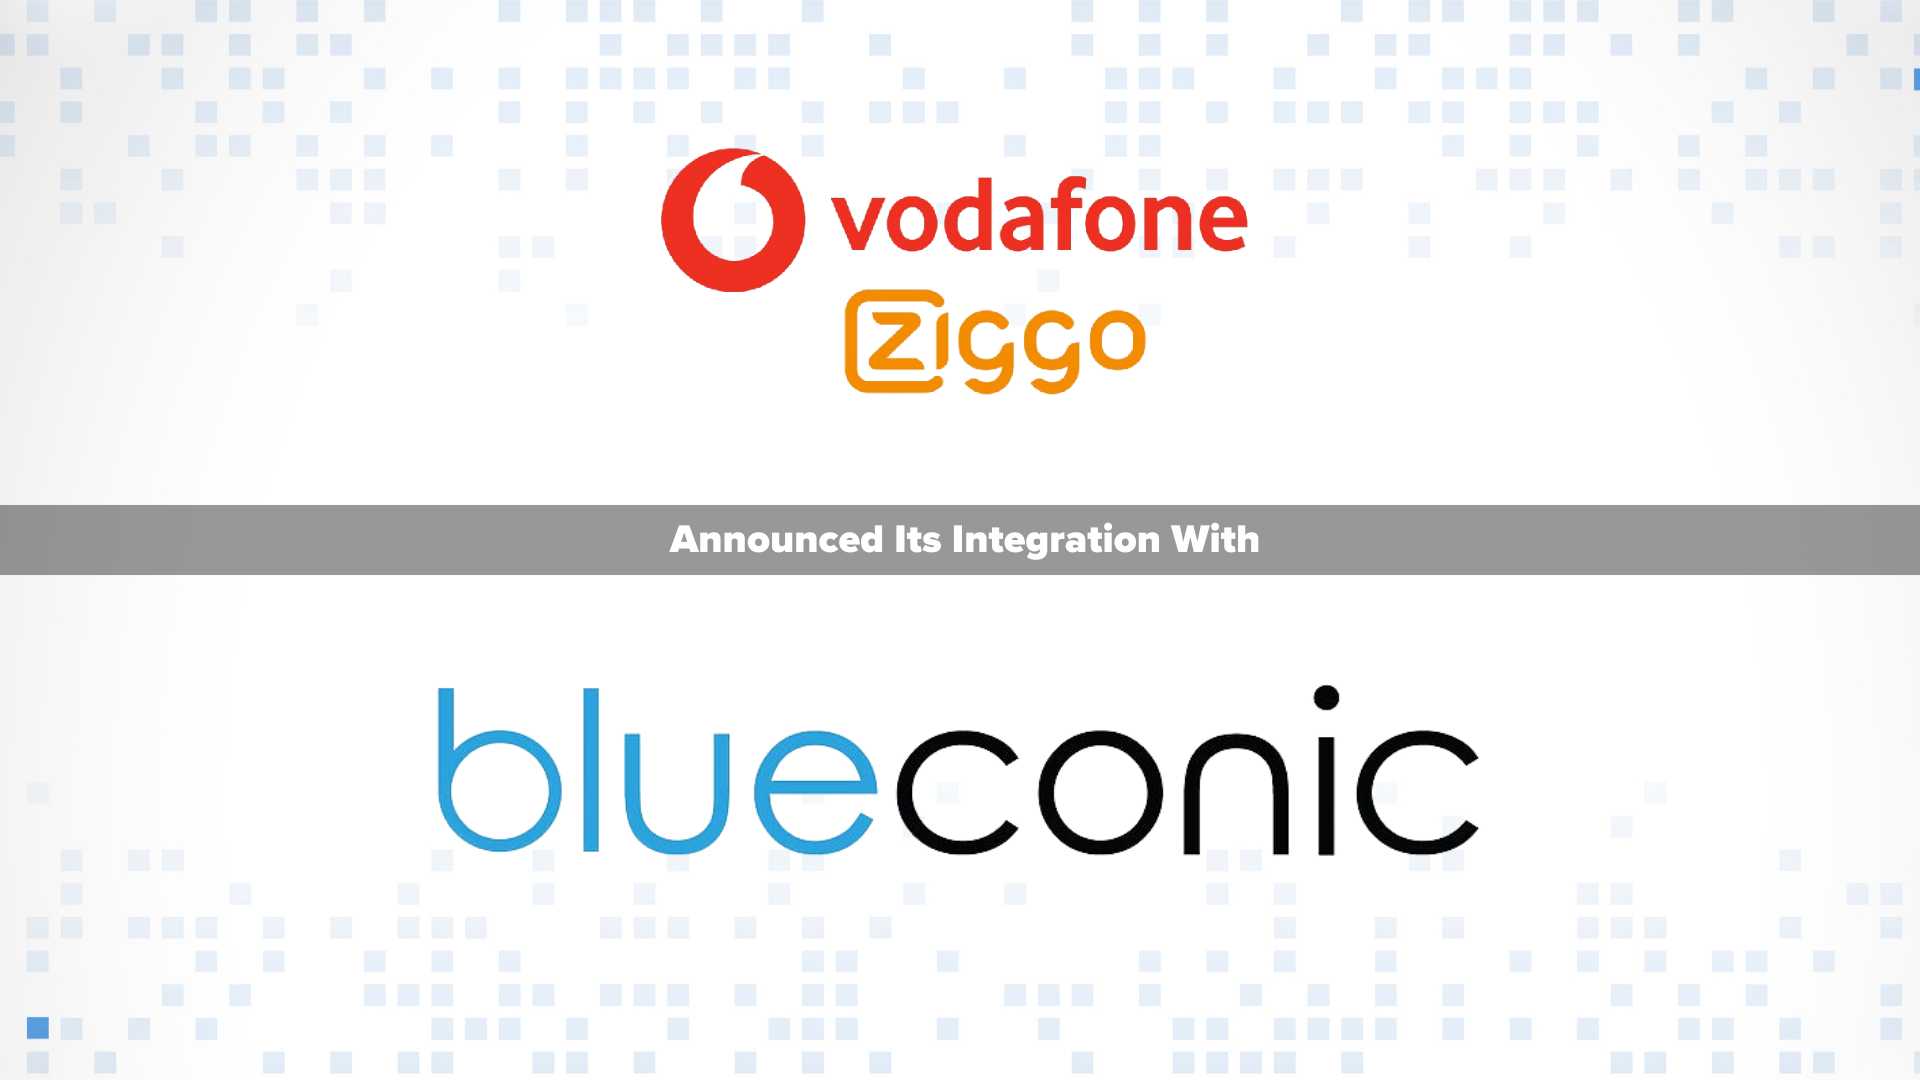 VodafoneZiggo and BlueConic Win Platinum Award for Best Customer Data Platform Solution